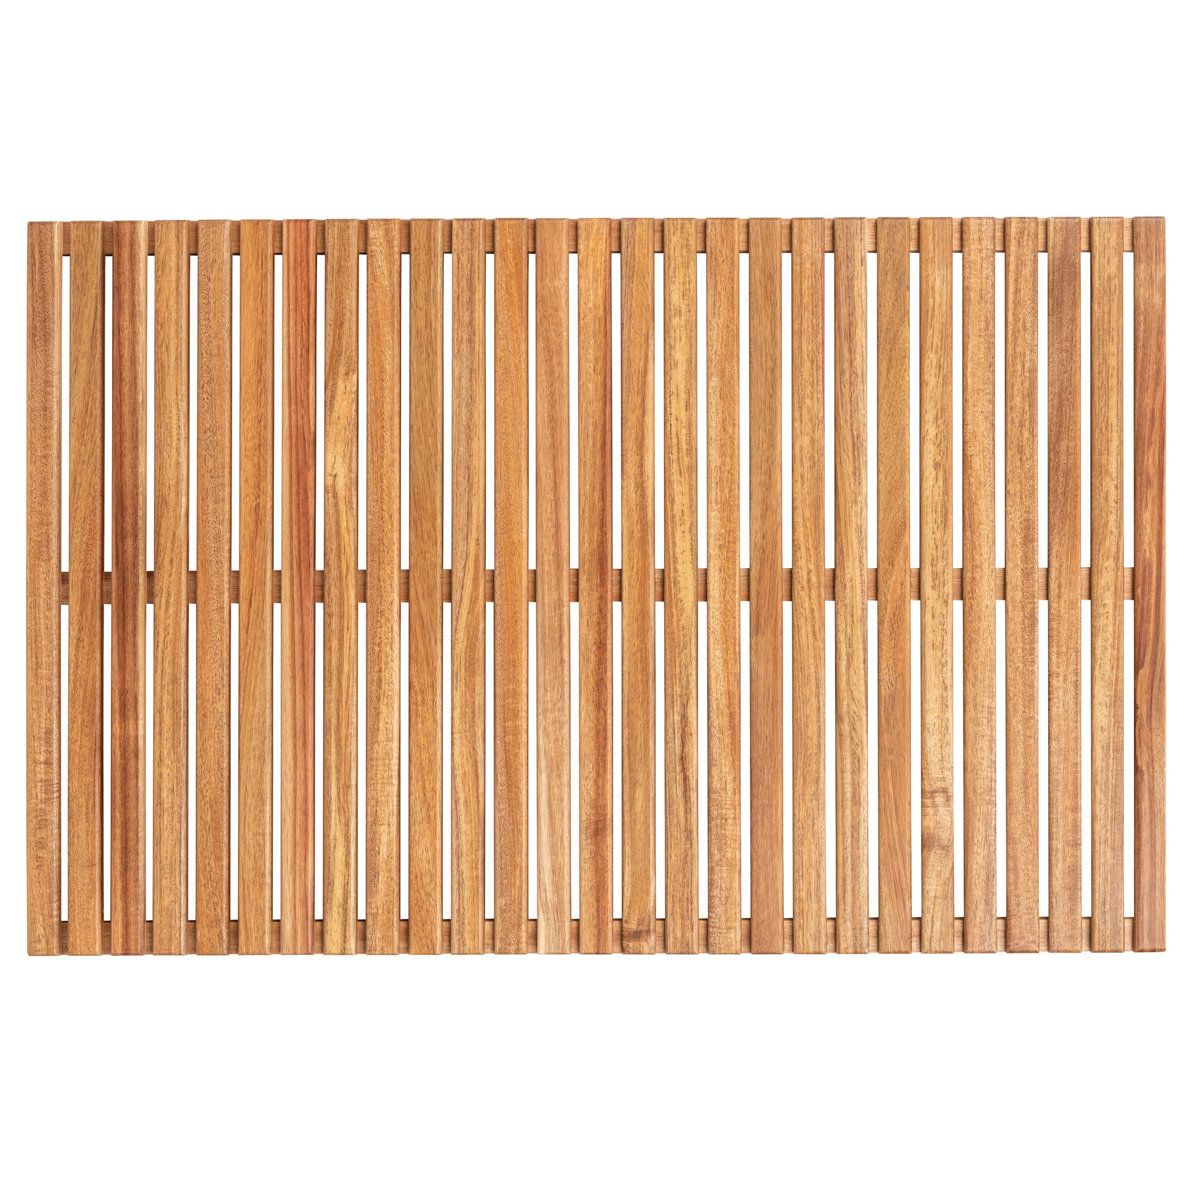 Dřevěná terasová dlažba, akatové dřevo, 55 x 85 cm, WENKO - EMAKO.CZ s.r.o.